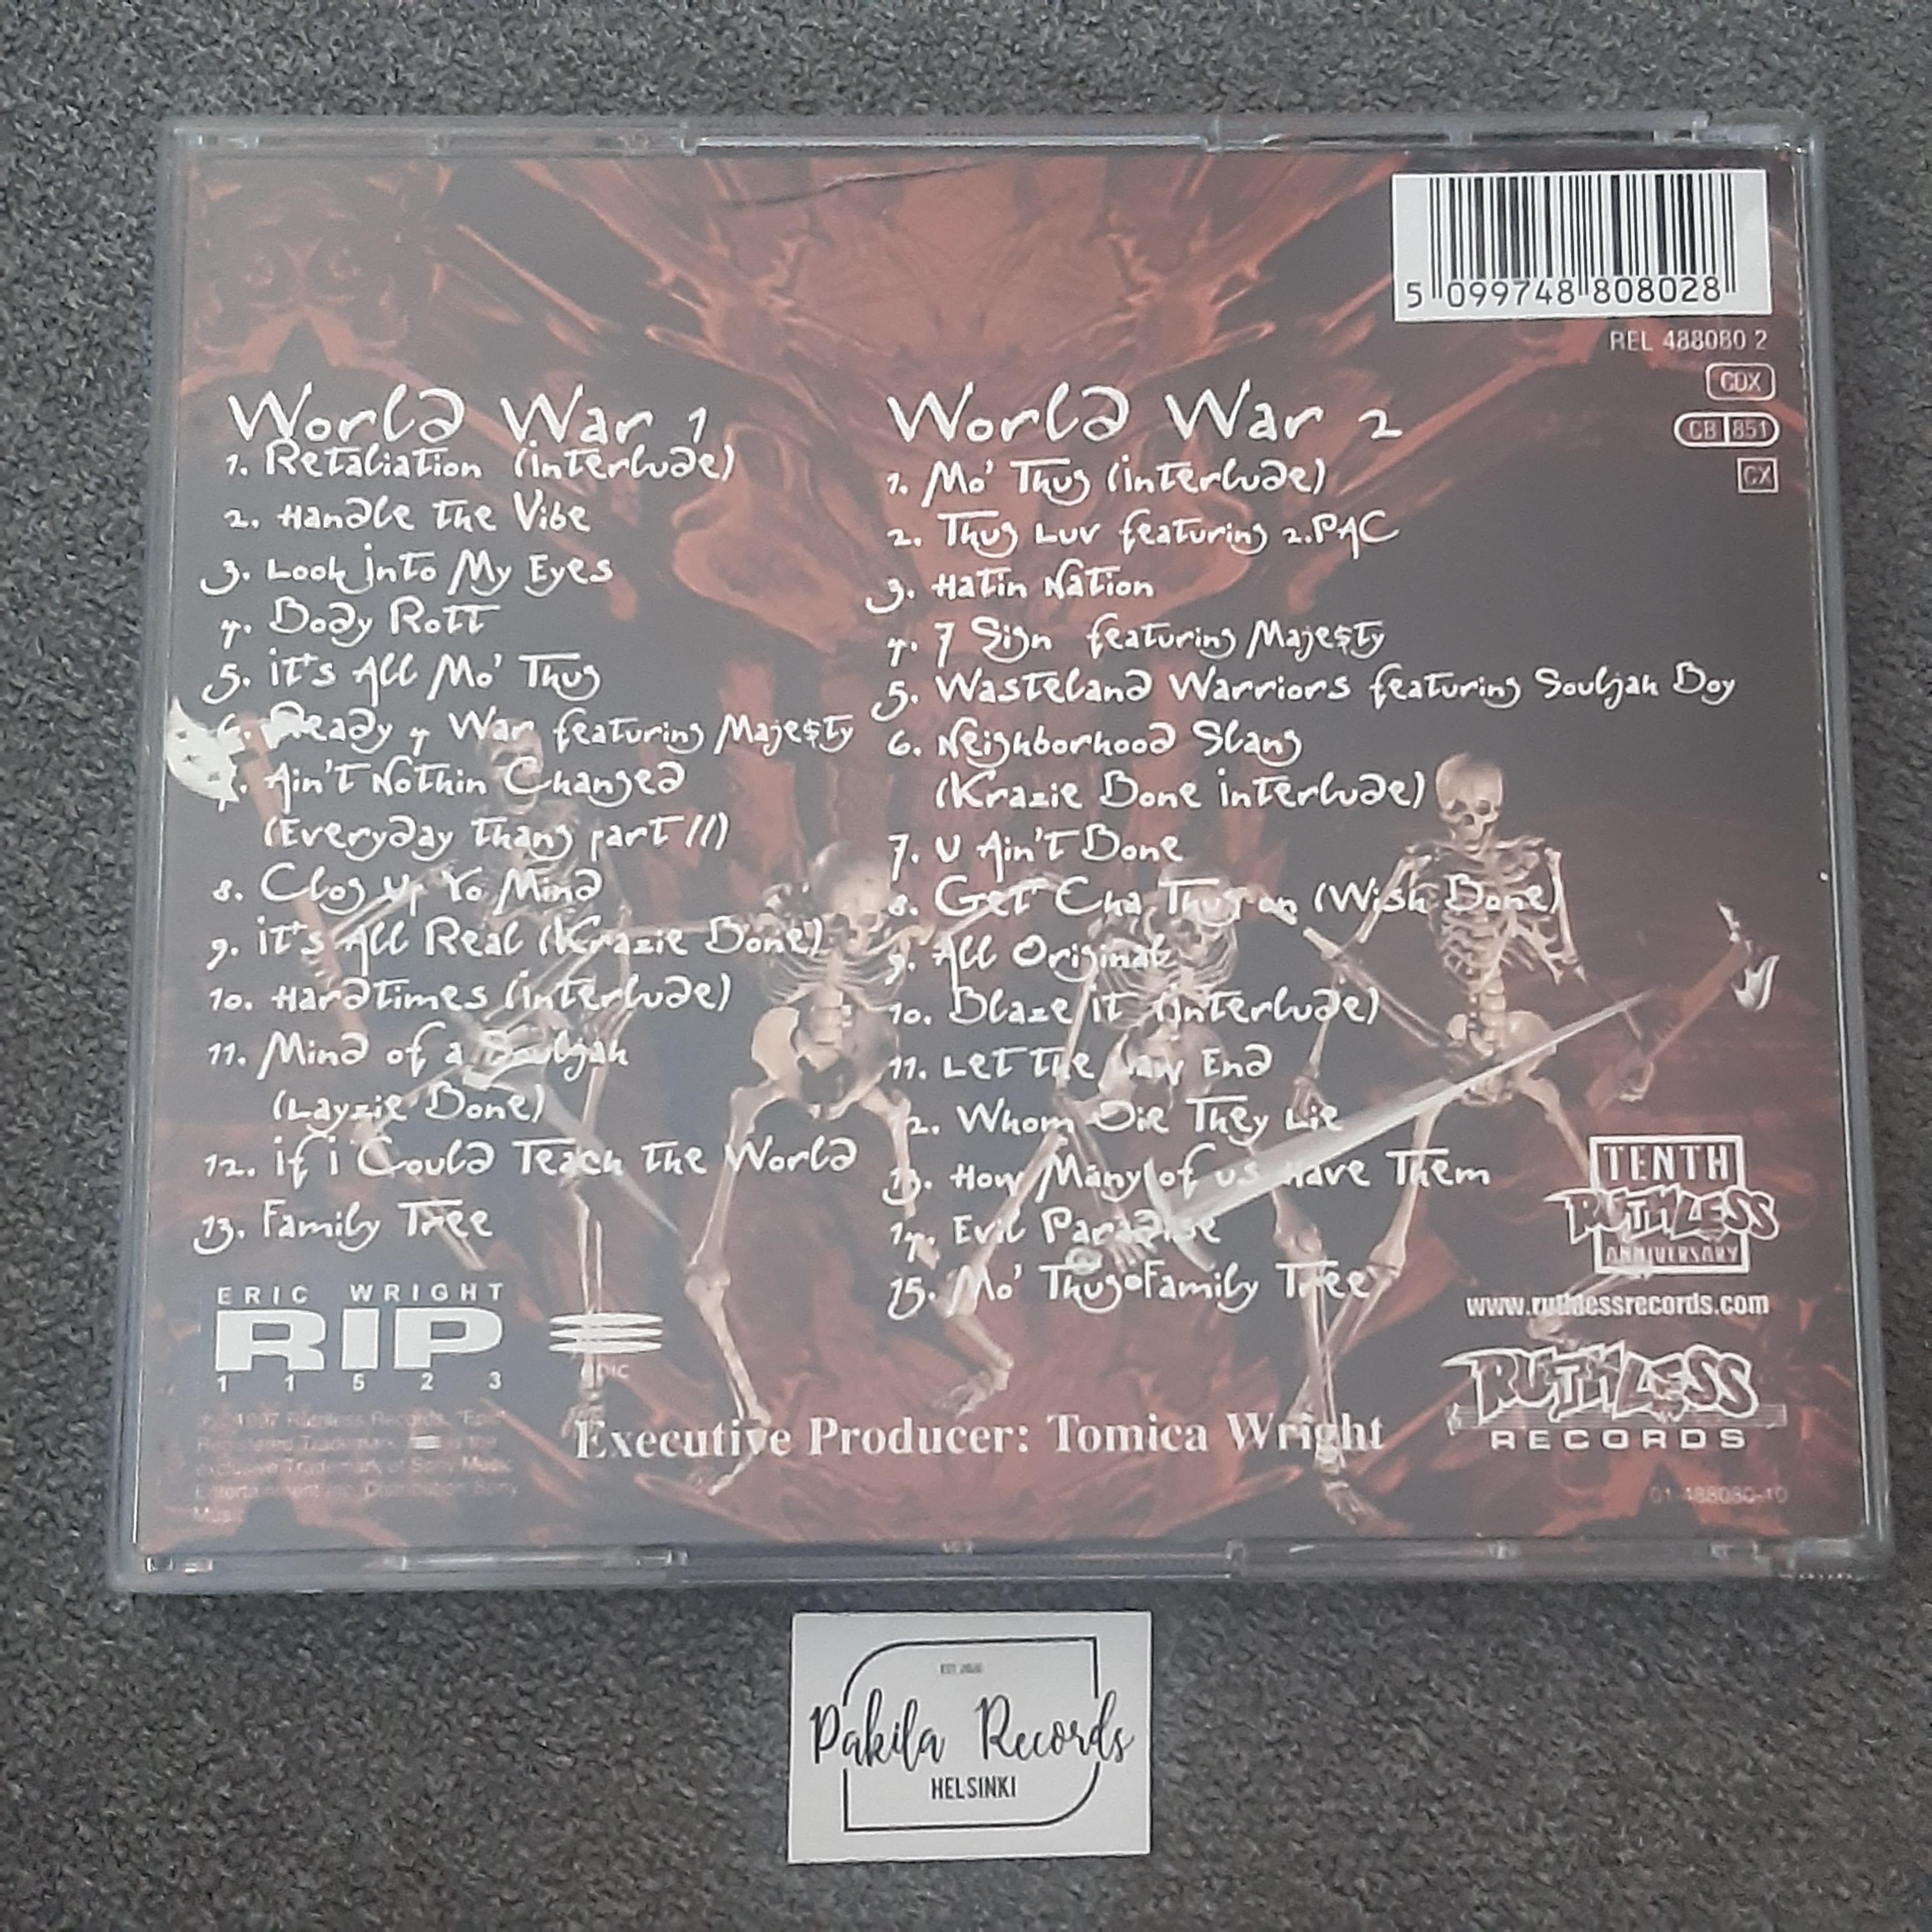 Bone Thugs-N-Harmony - The Art Of War - 2 CD (käytetty)